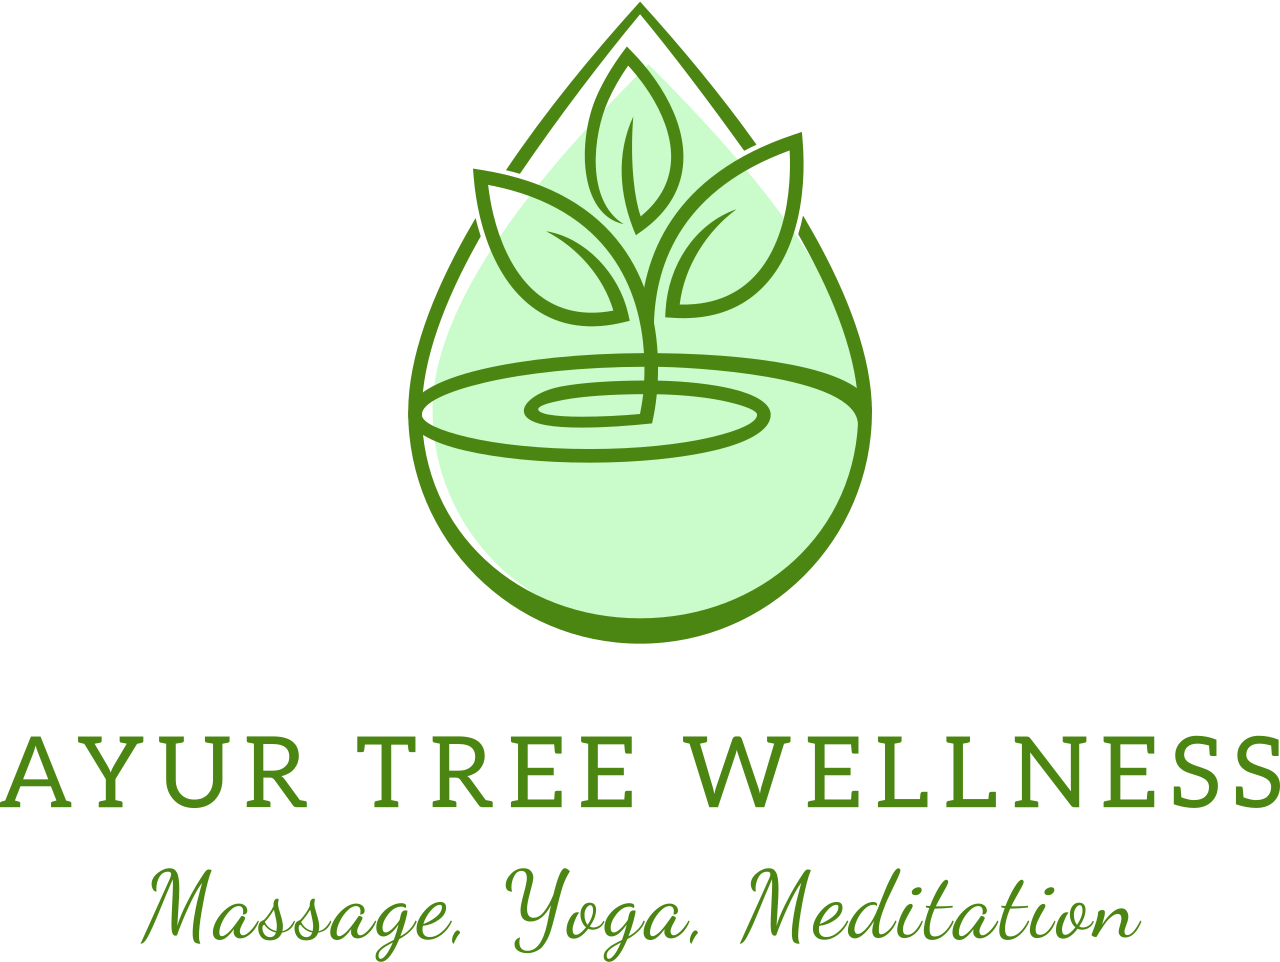 Ayur Tree Wellness's web page